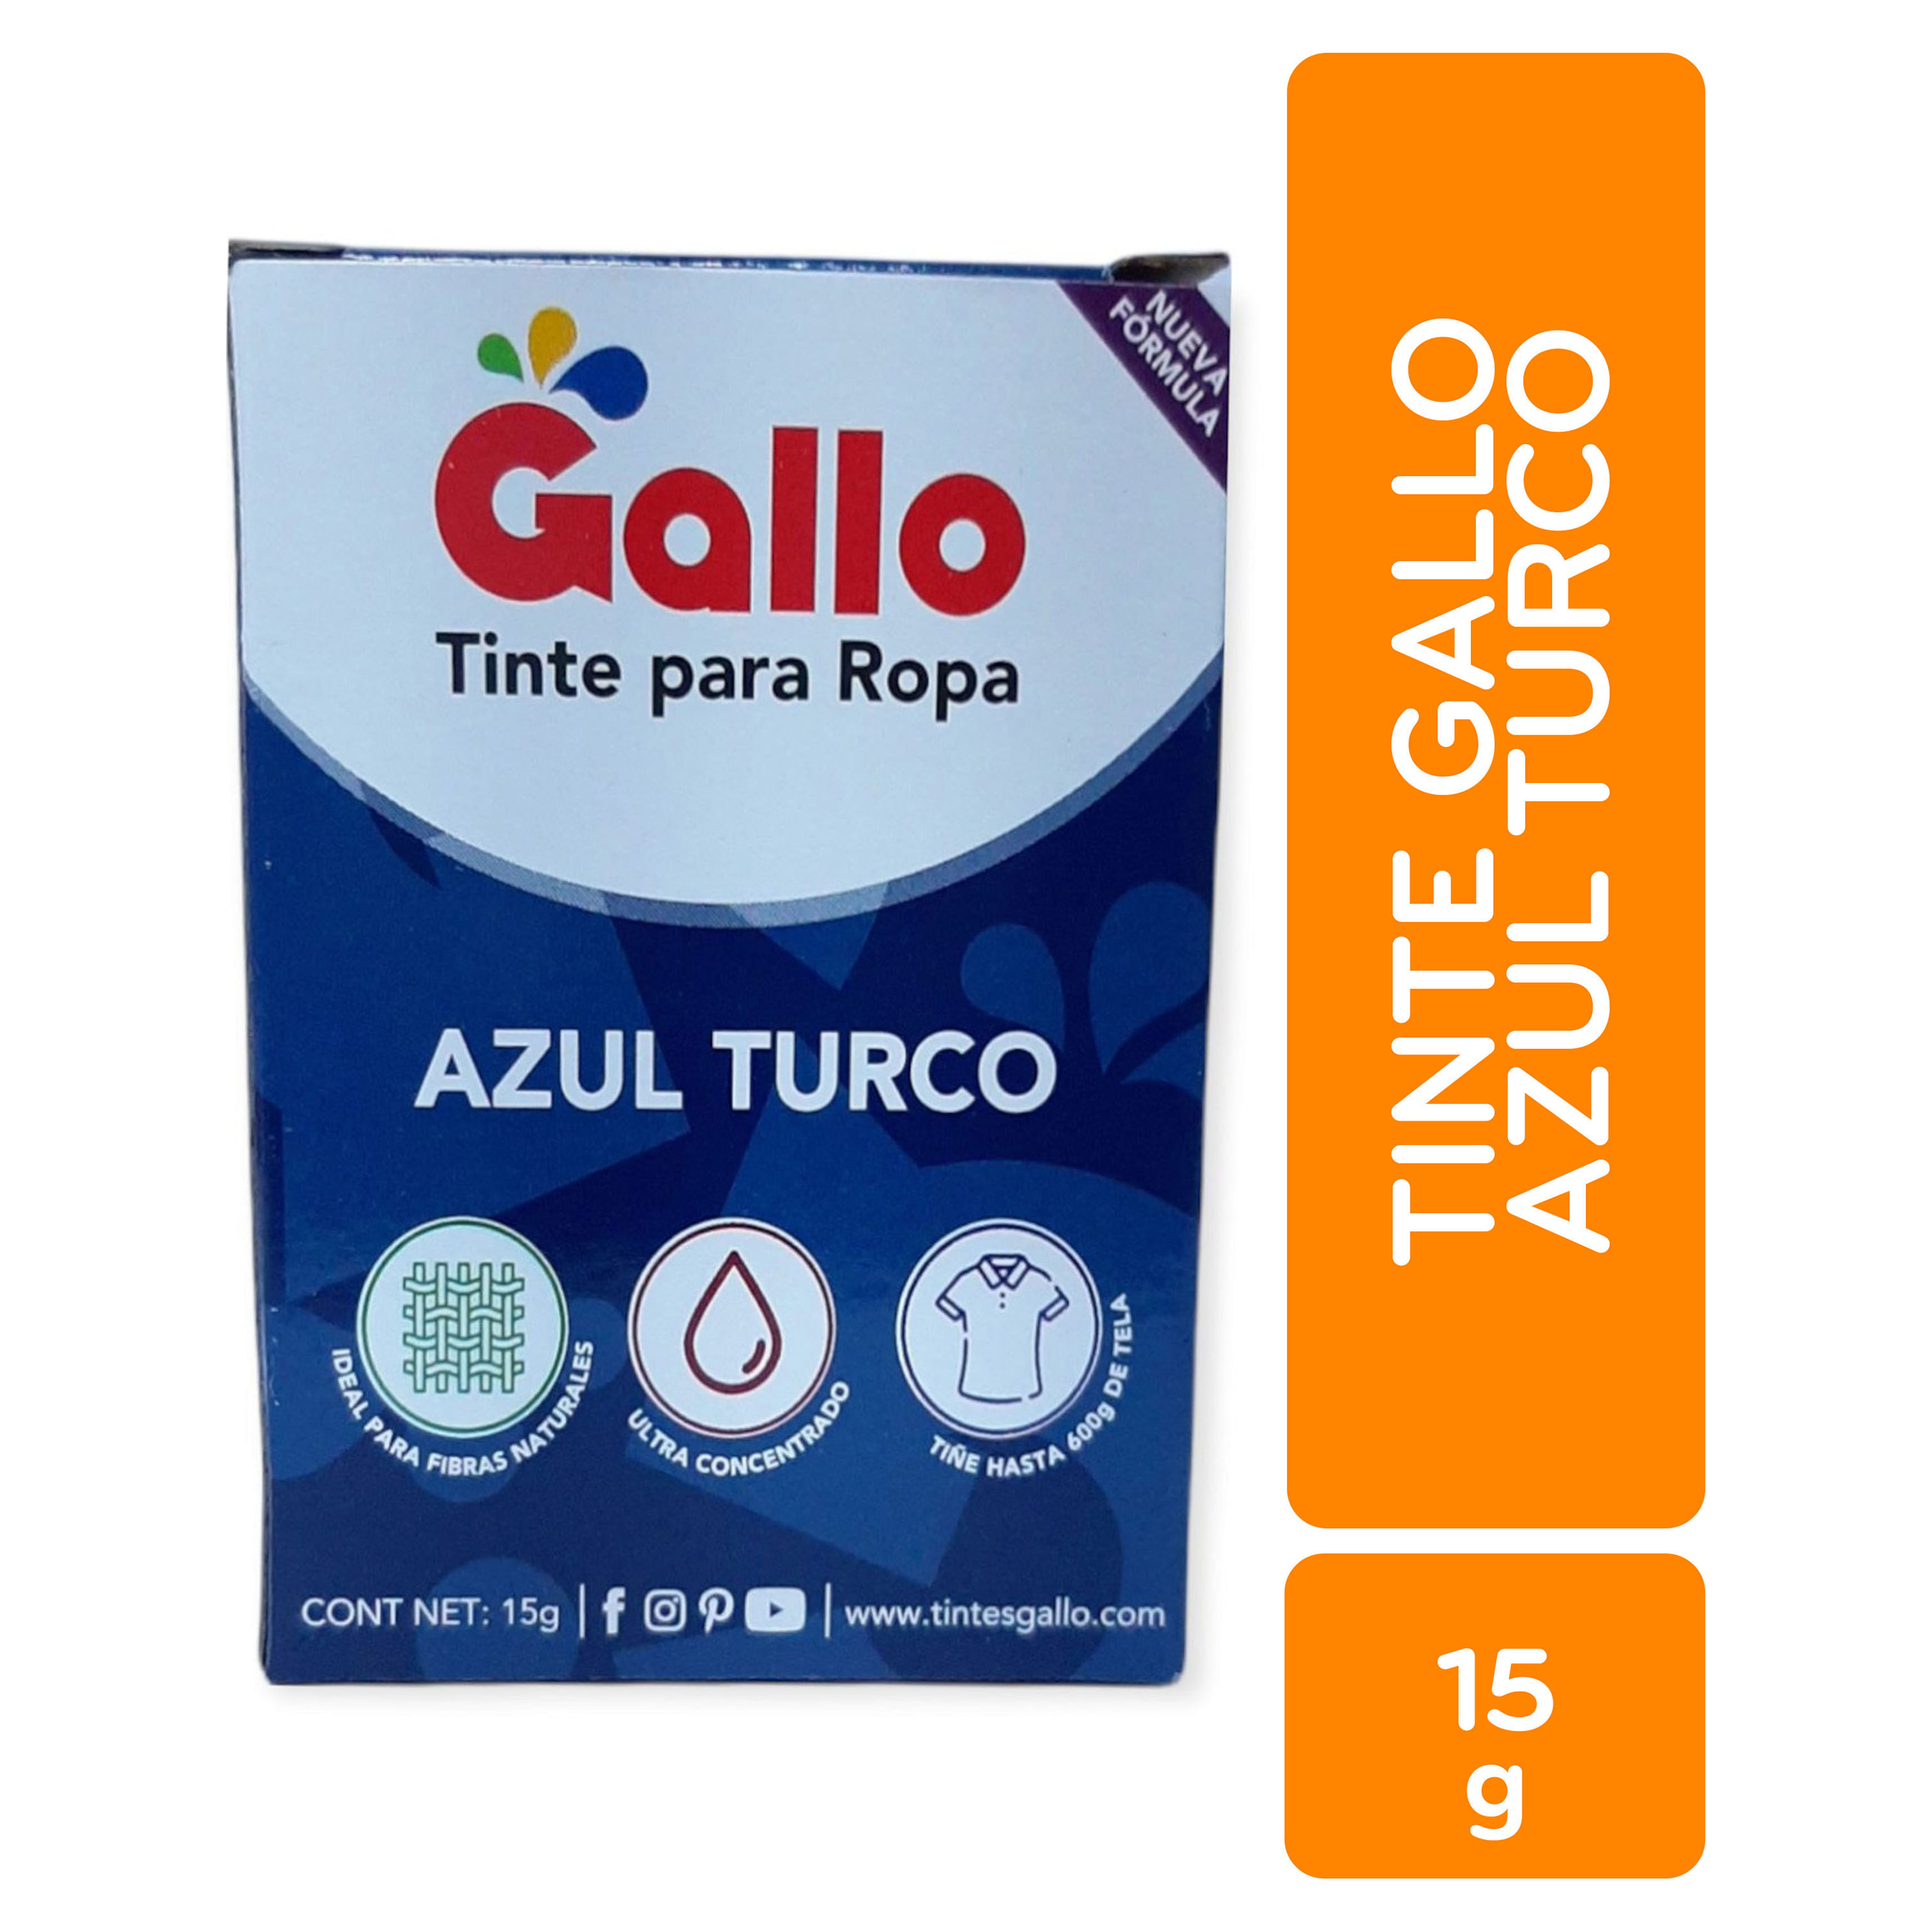 Comprar Tinte En Polvo Gallo Ropa Color Turco -15gr Walmart Costa Rica